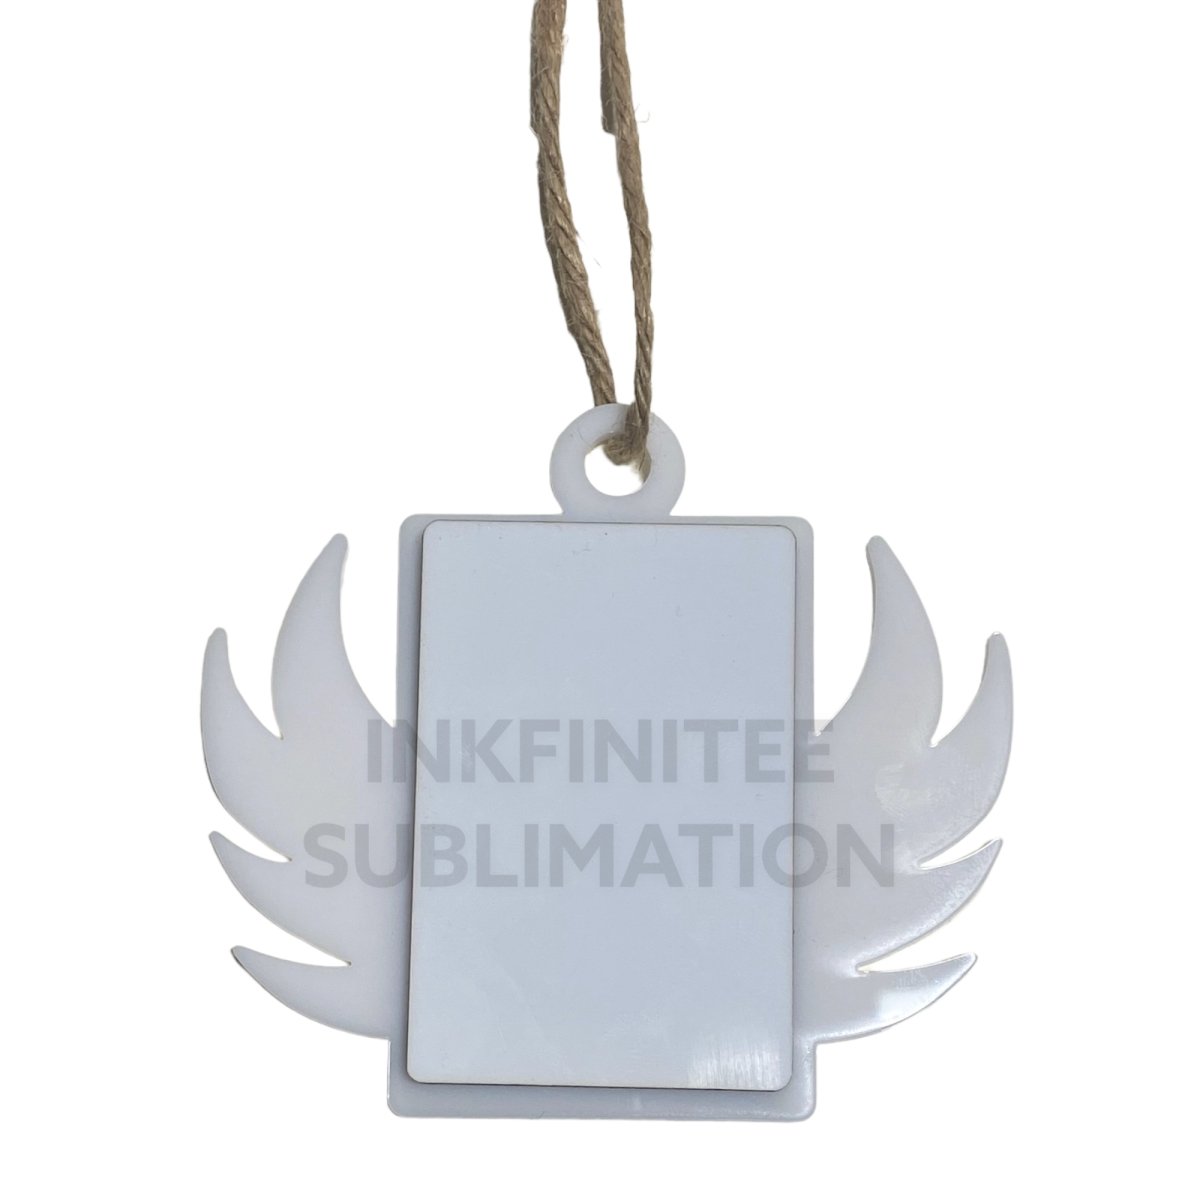 Sublimation 2”x3” Rectangle Angel Ornament - Inkfinitee Sublimation